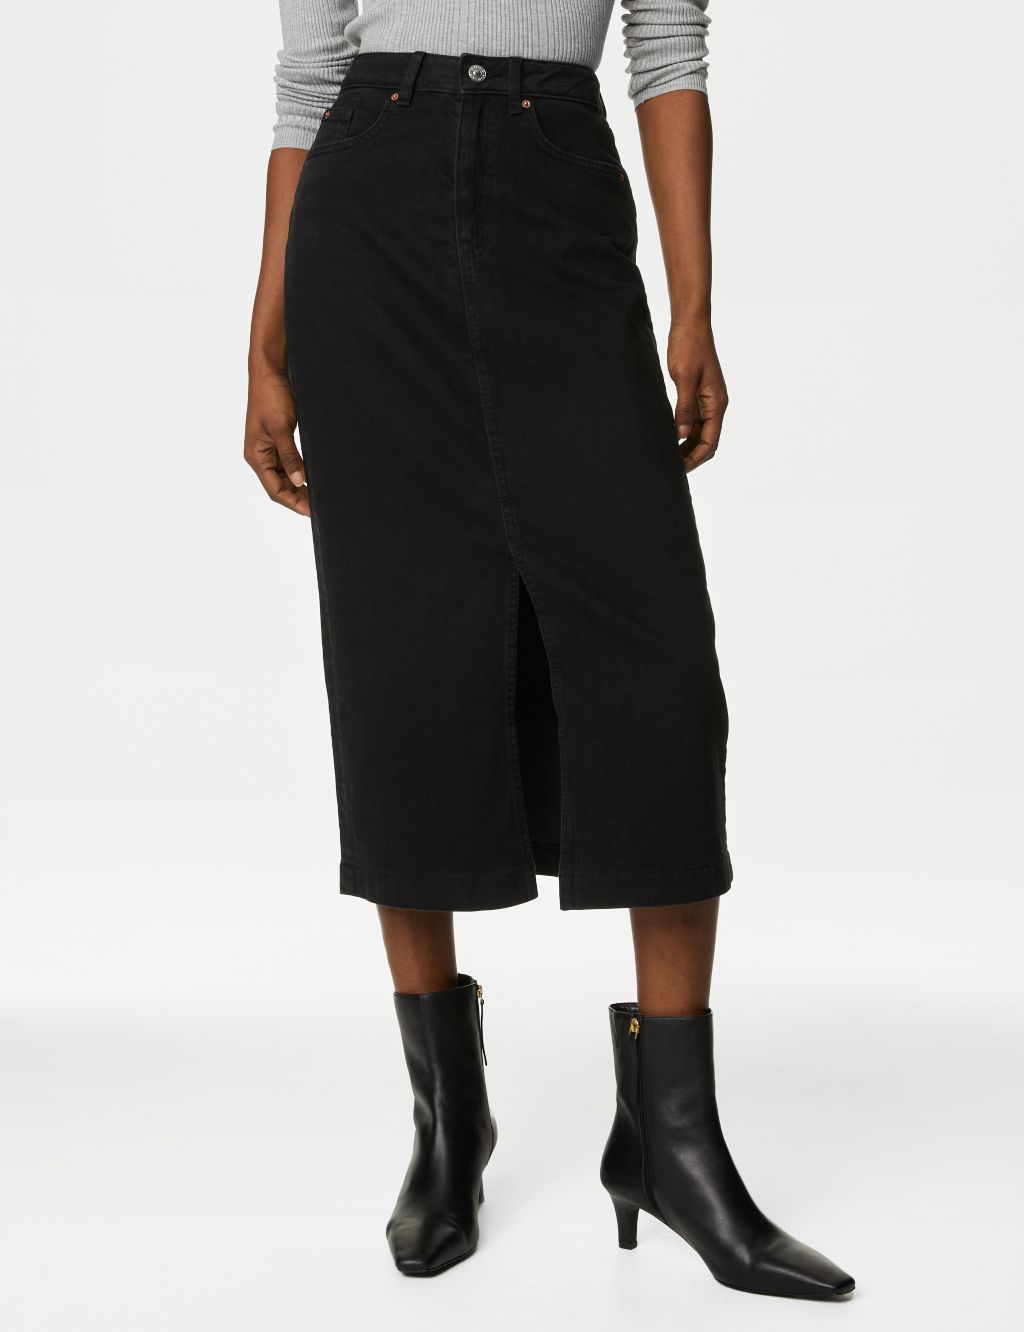 Denim Split Front Midi Skirt | M&S Collection | M&S